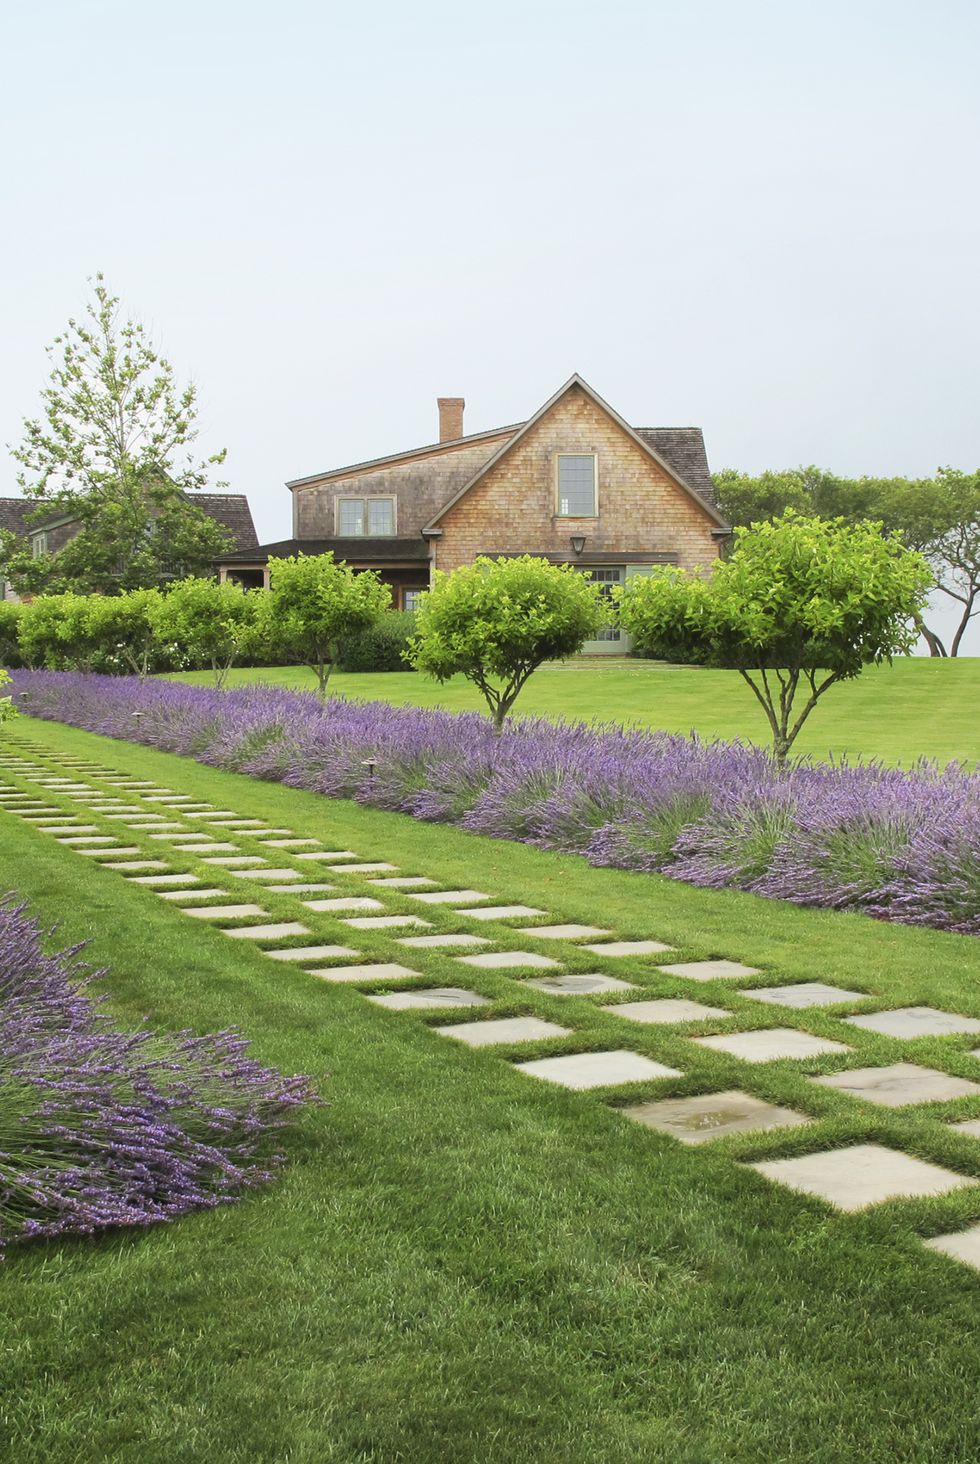 ðŸ¥‡ 15 Best Gorgeous Front Yard Landscaping Ideas 2020